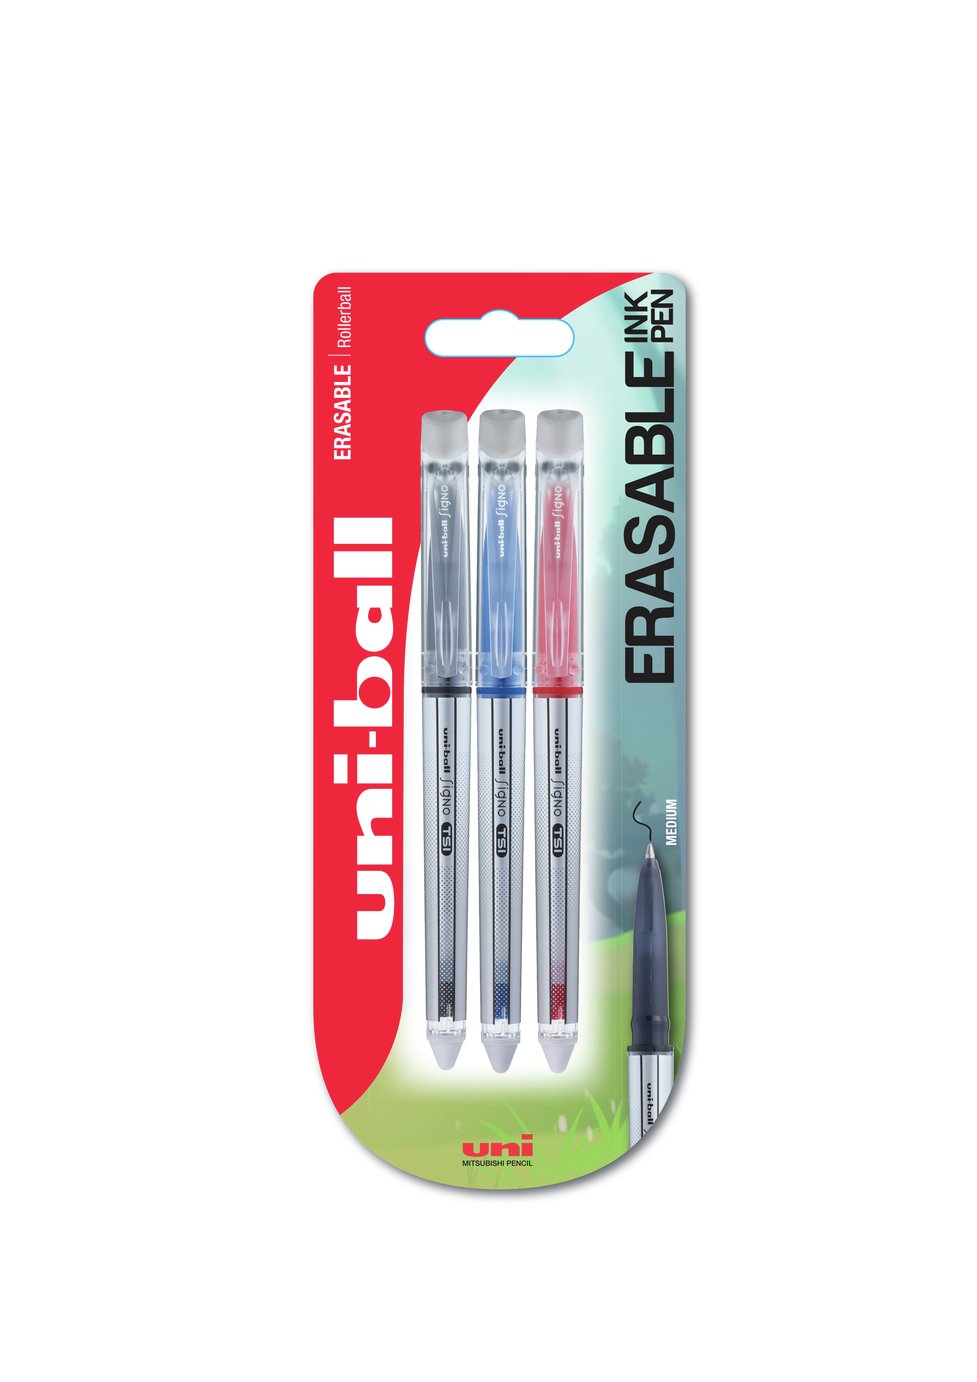 Uni-ball Signo TSI Erasable Pen 3 Pack - Assorted